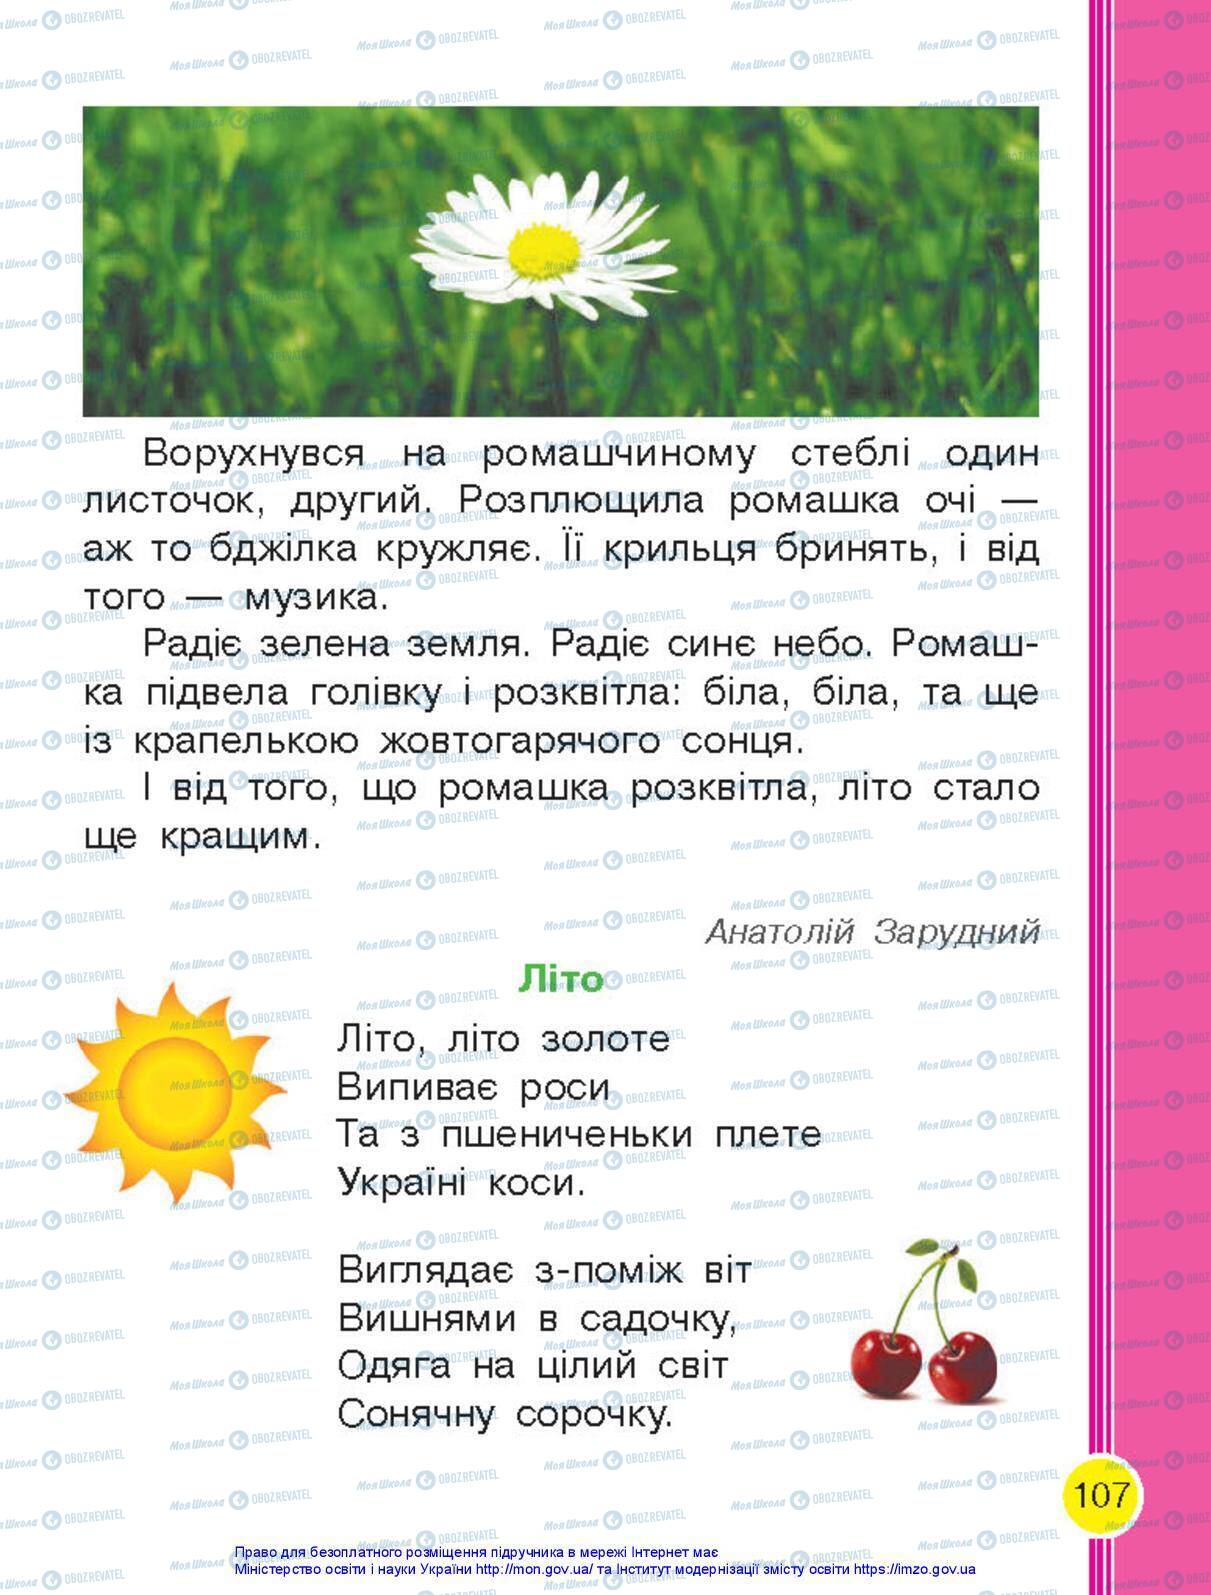 Учебники Укр мова 1 класс страница 114